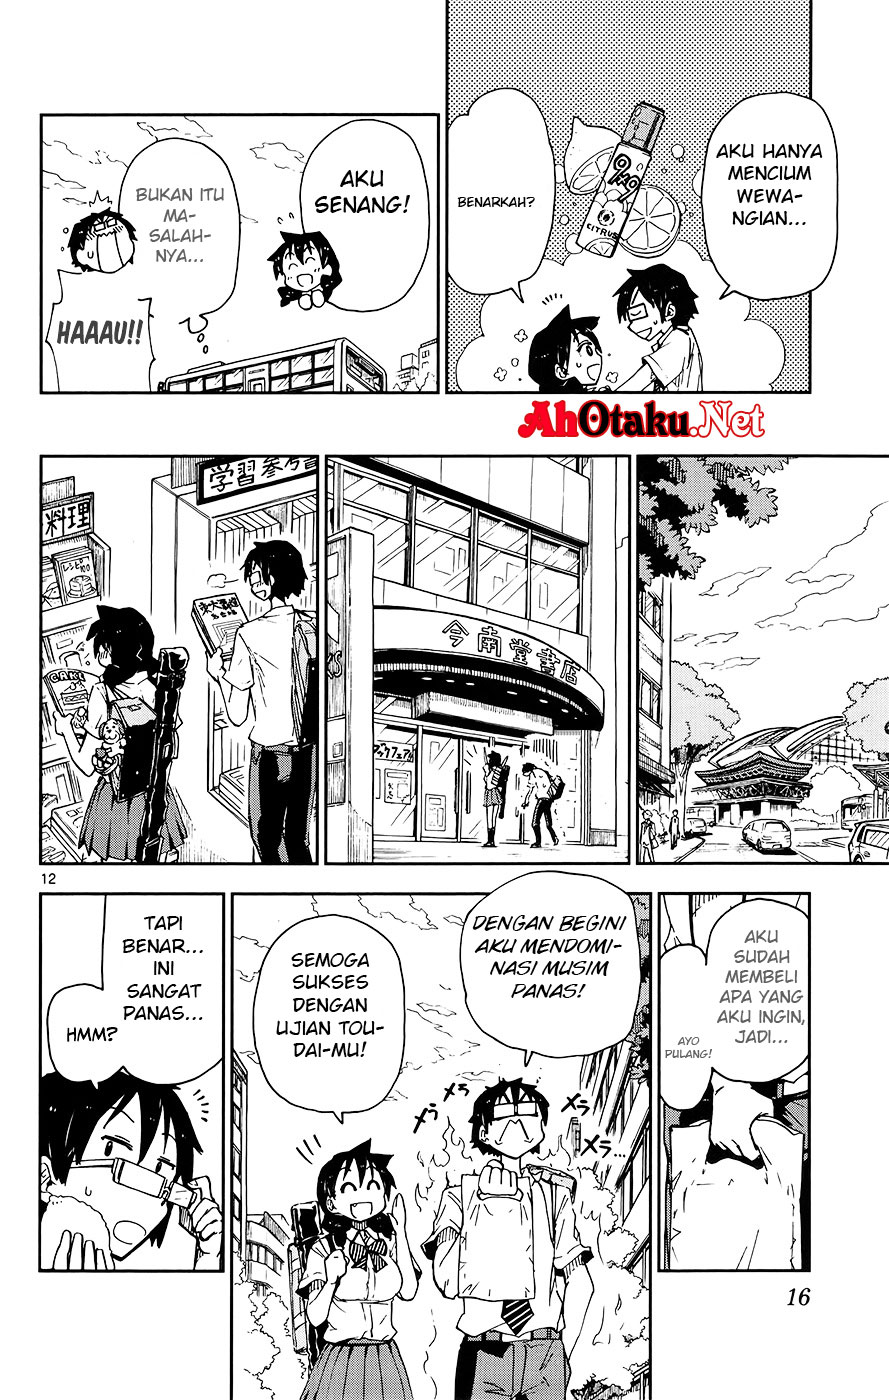 Amano Megumi wa Sukidarake! Chapter 10